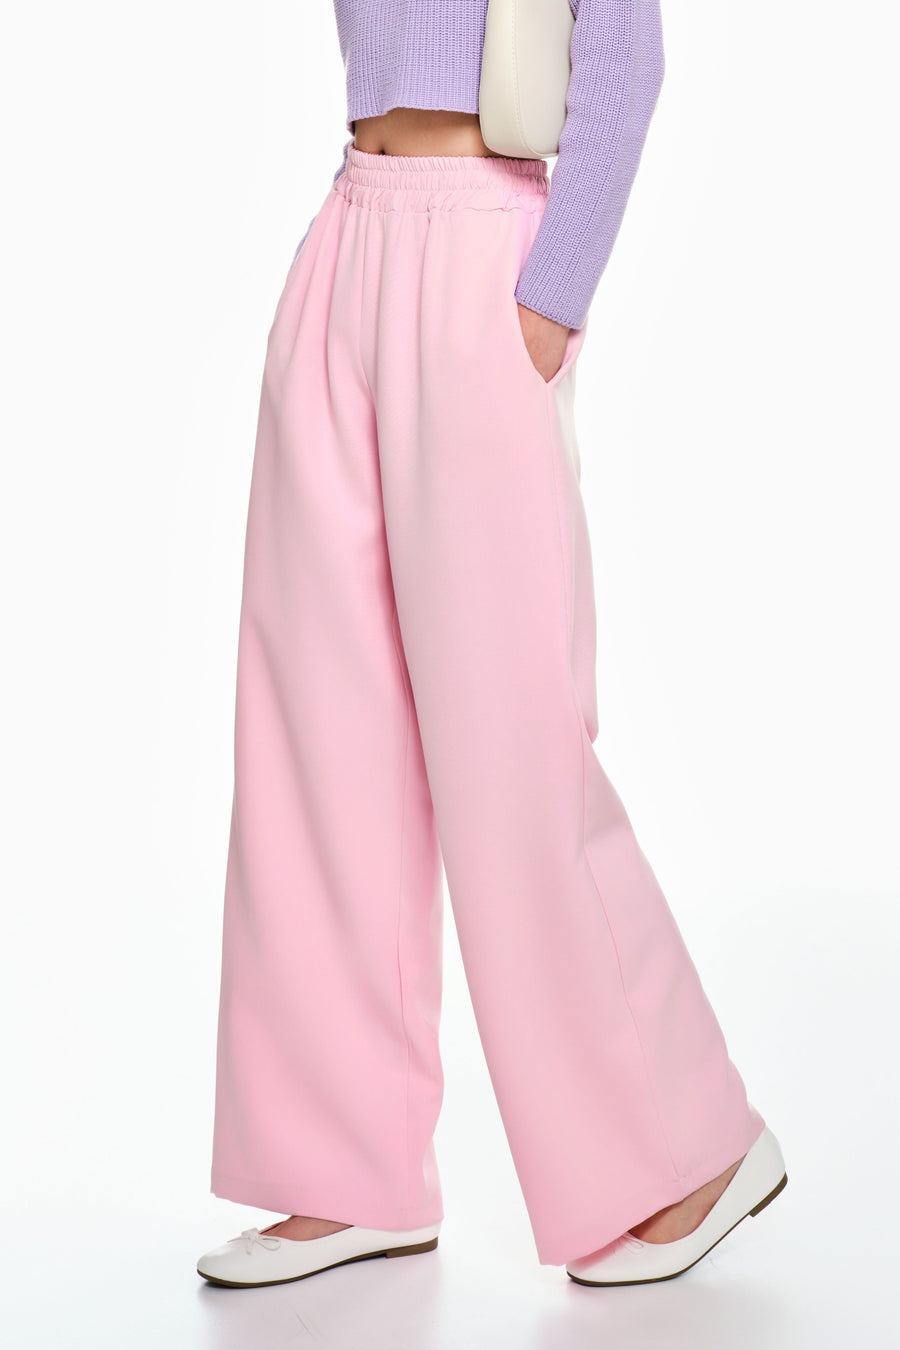 Soft Pants Light Pink